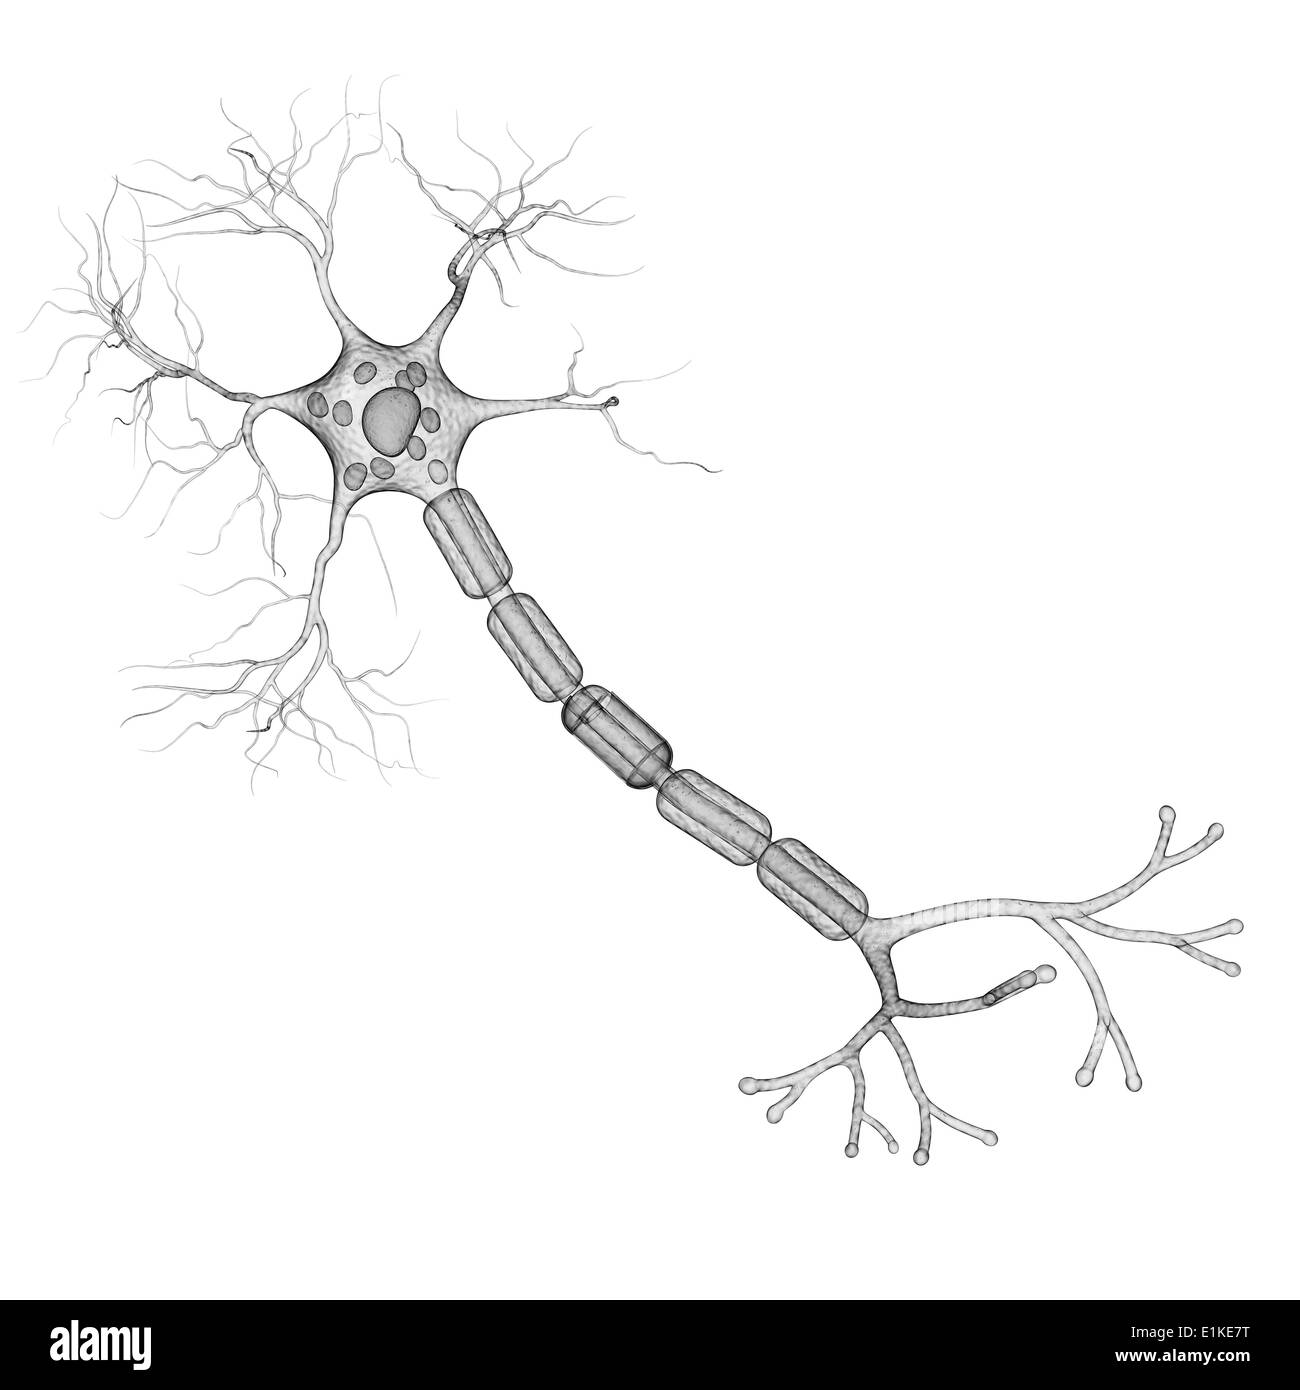 Cellula nervosa computer grafica. Foto Stock